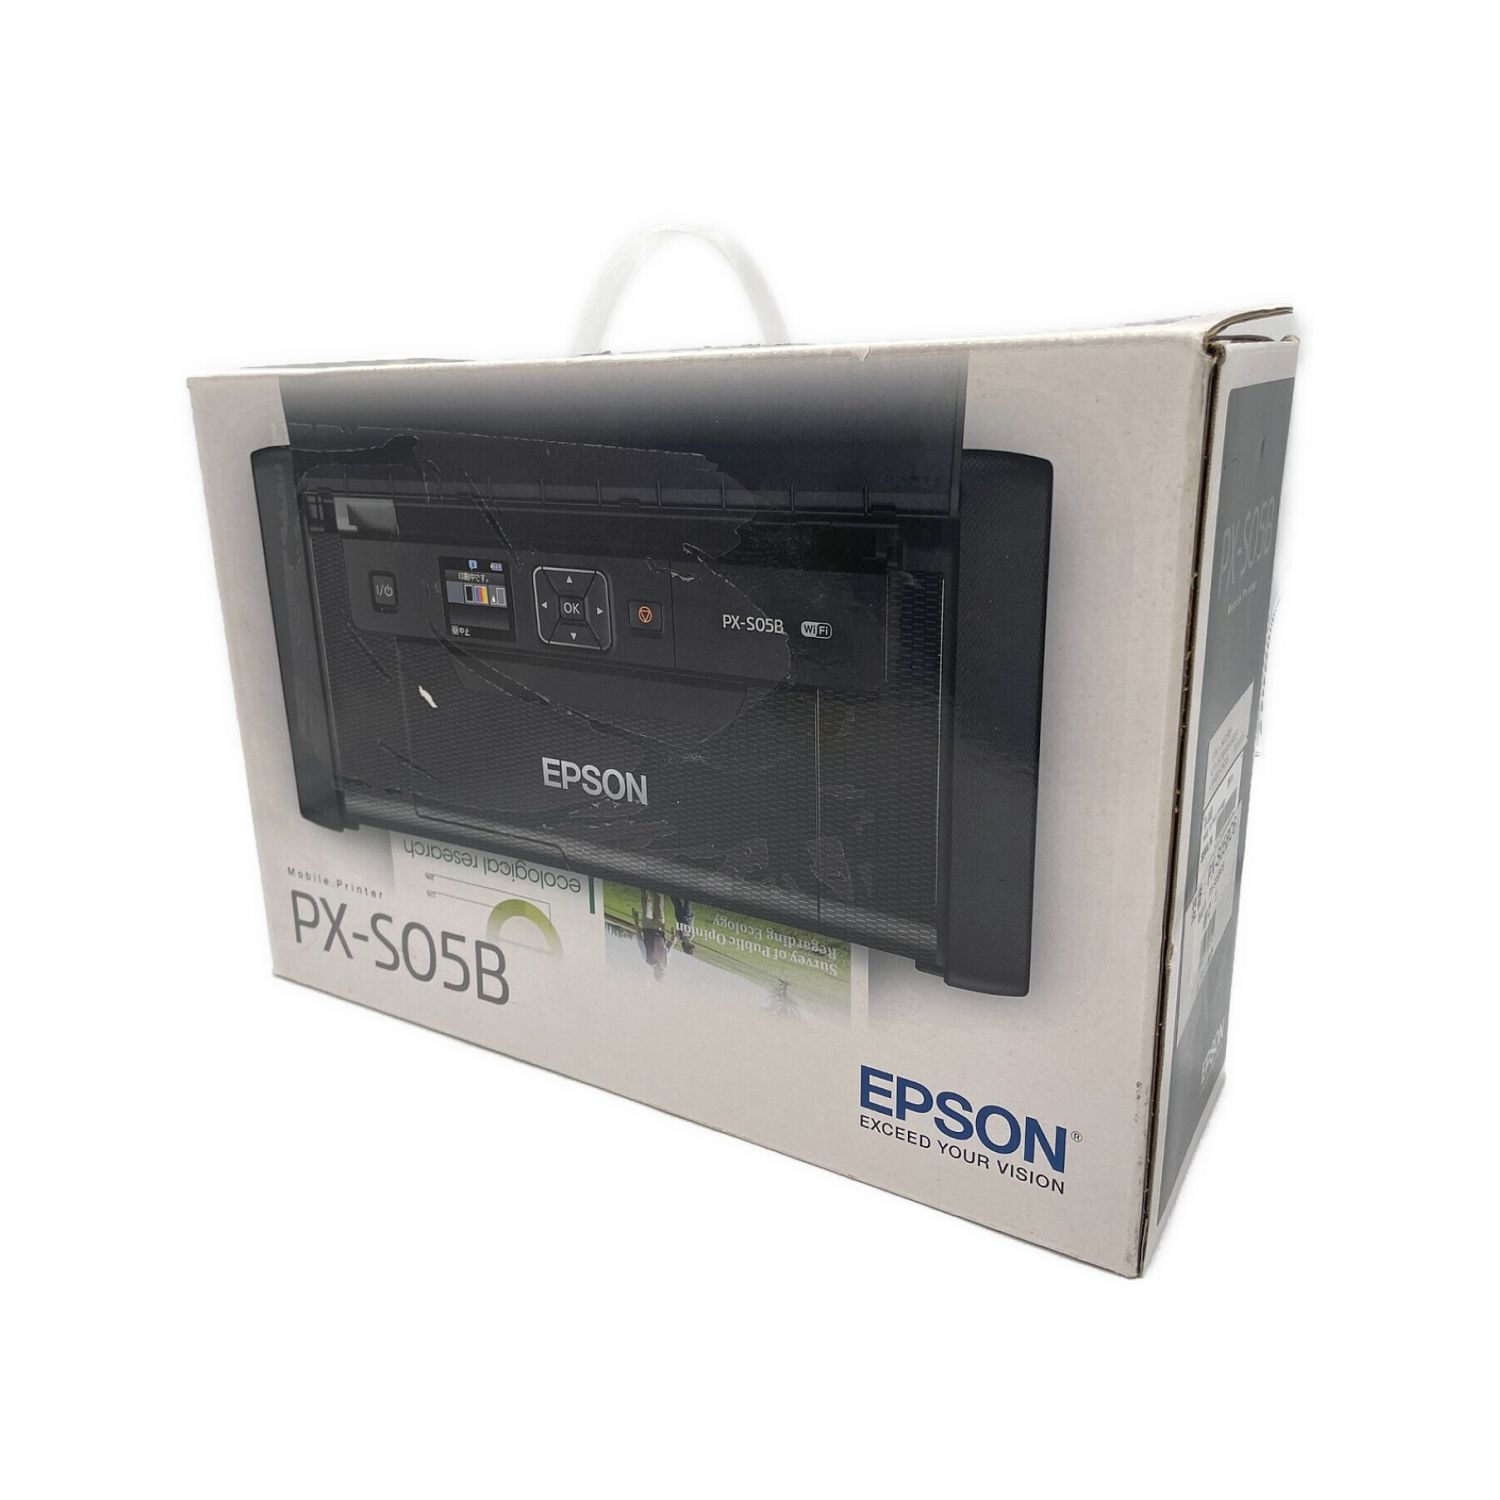 Epson mobile printer PX-S05B